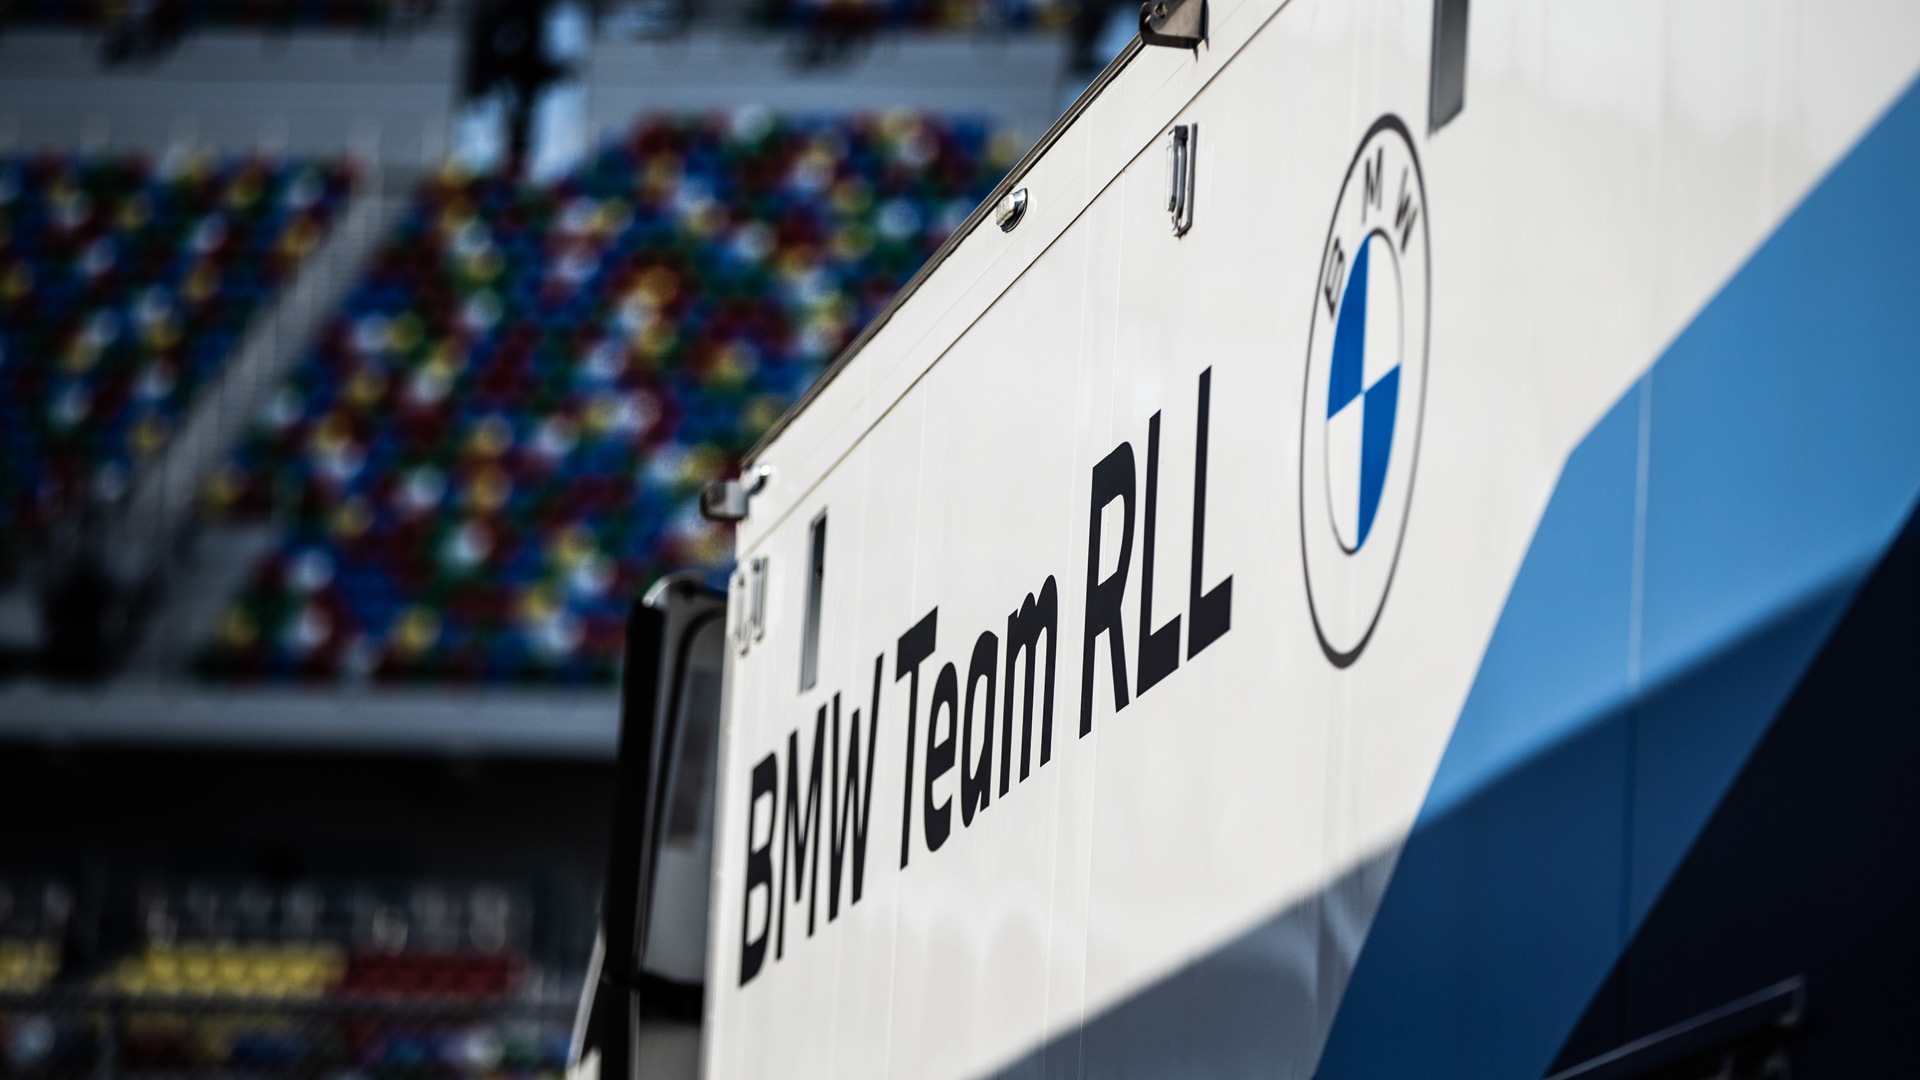 BMW Team RLL